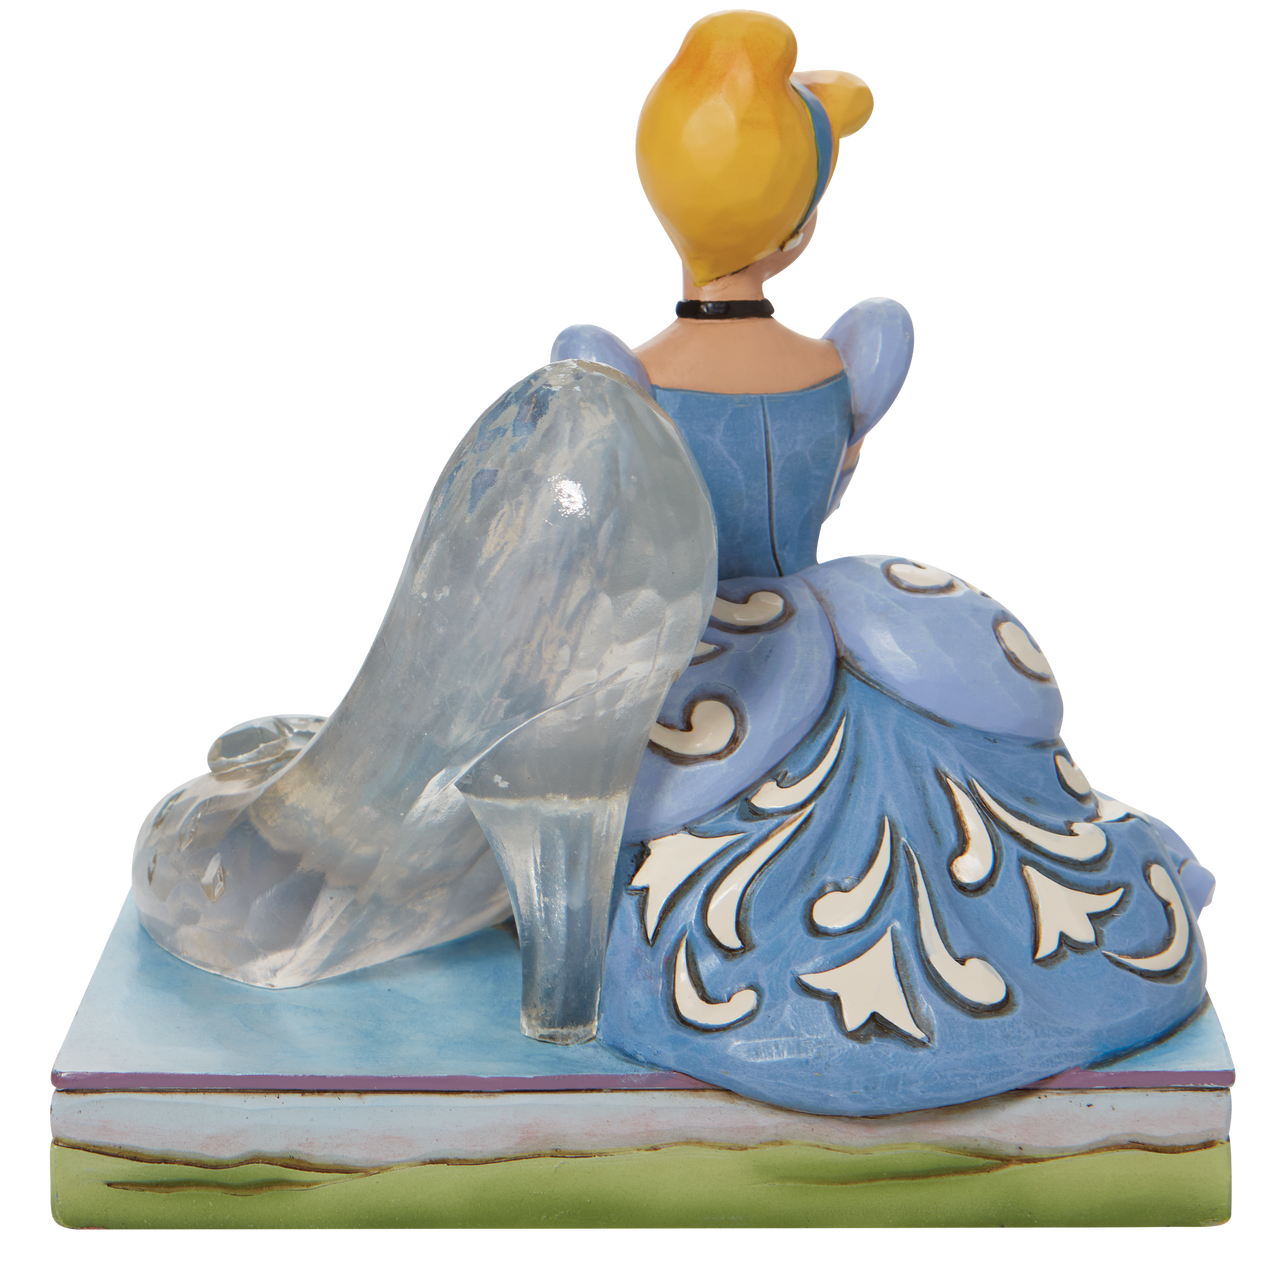 Jasmine and Genie Lamp Figure by Jim Shore – Aladdin